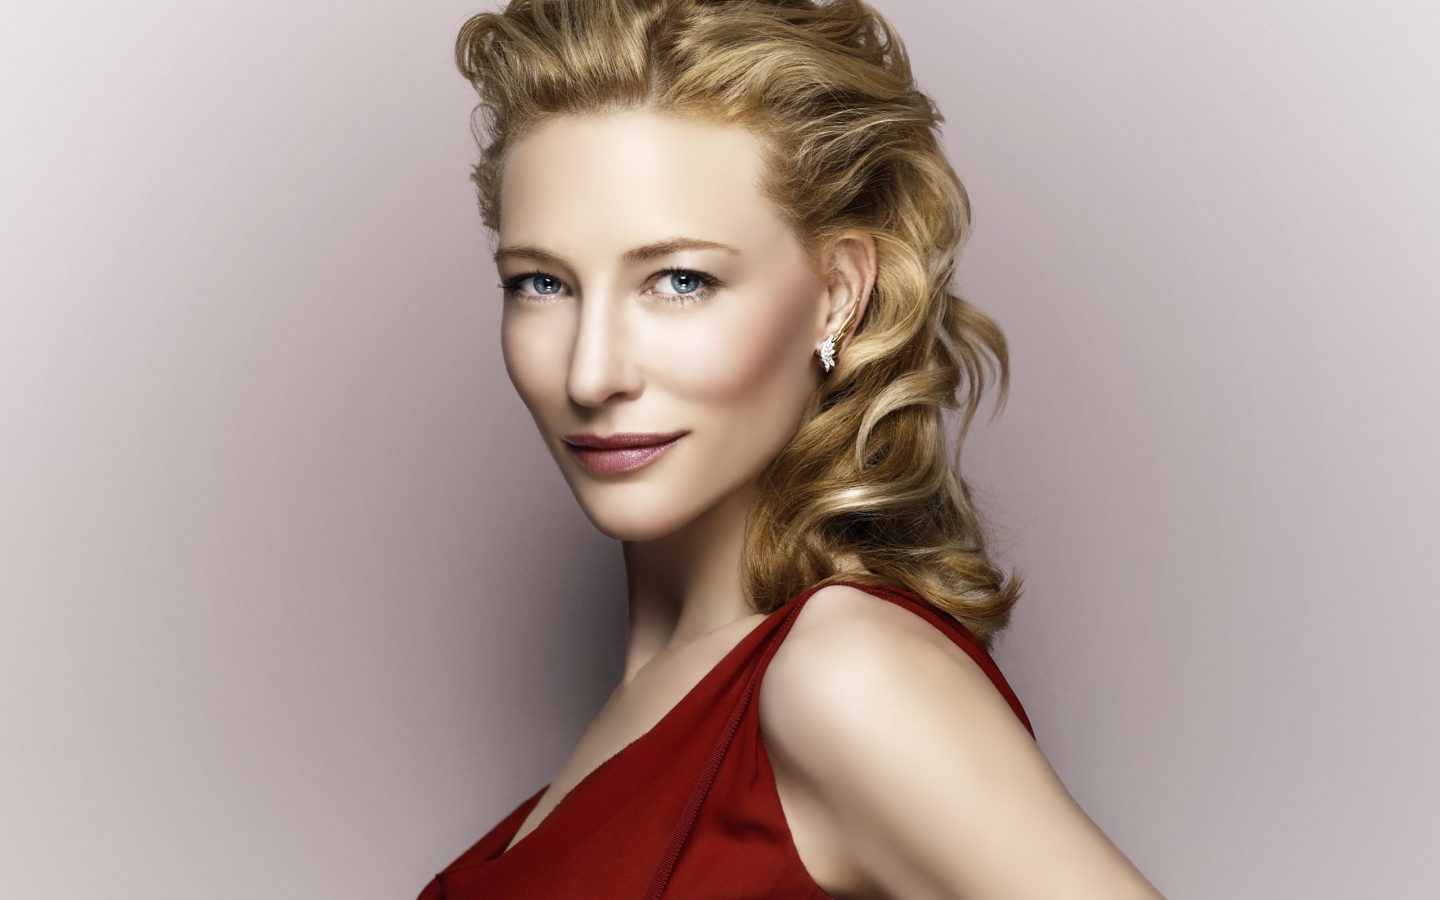 Cate Blanchett for 1440 x 900 widescreen resolution